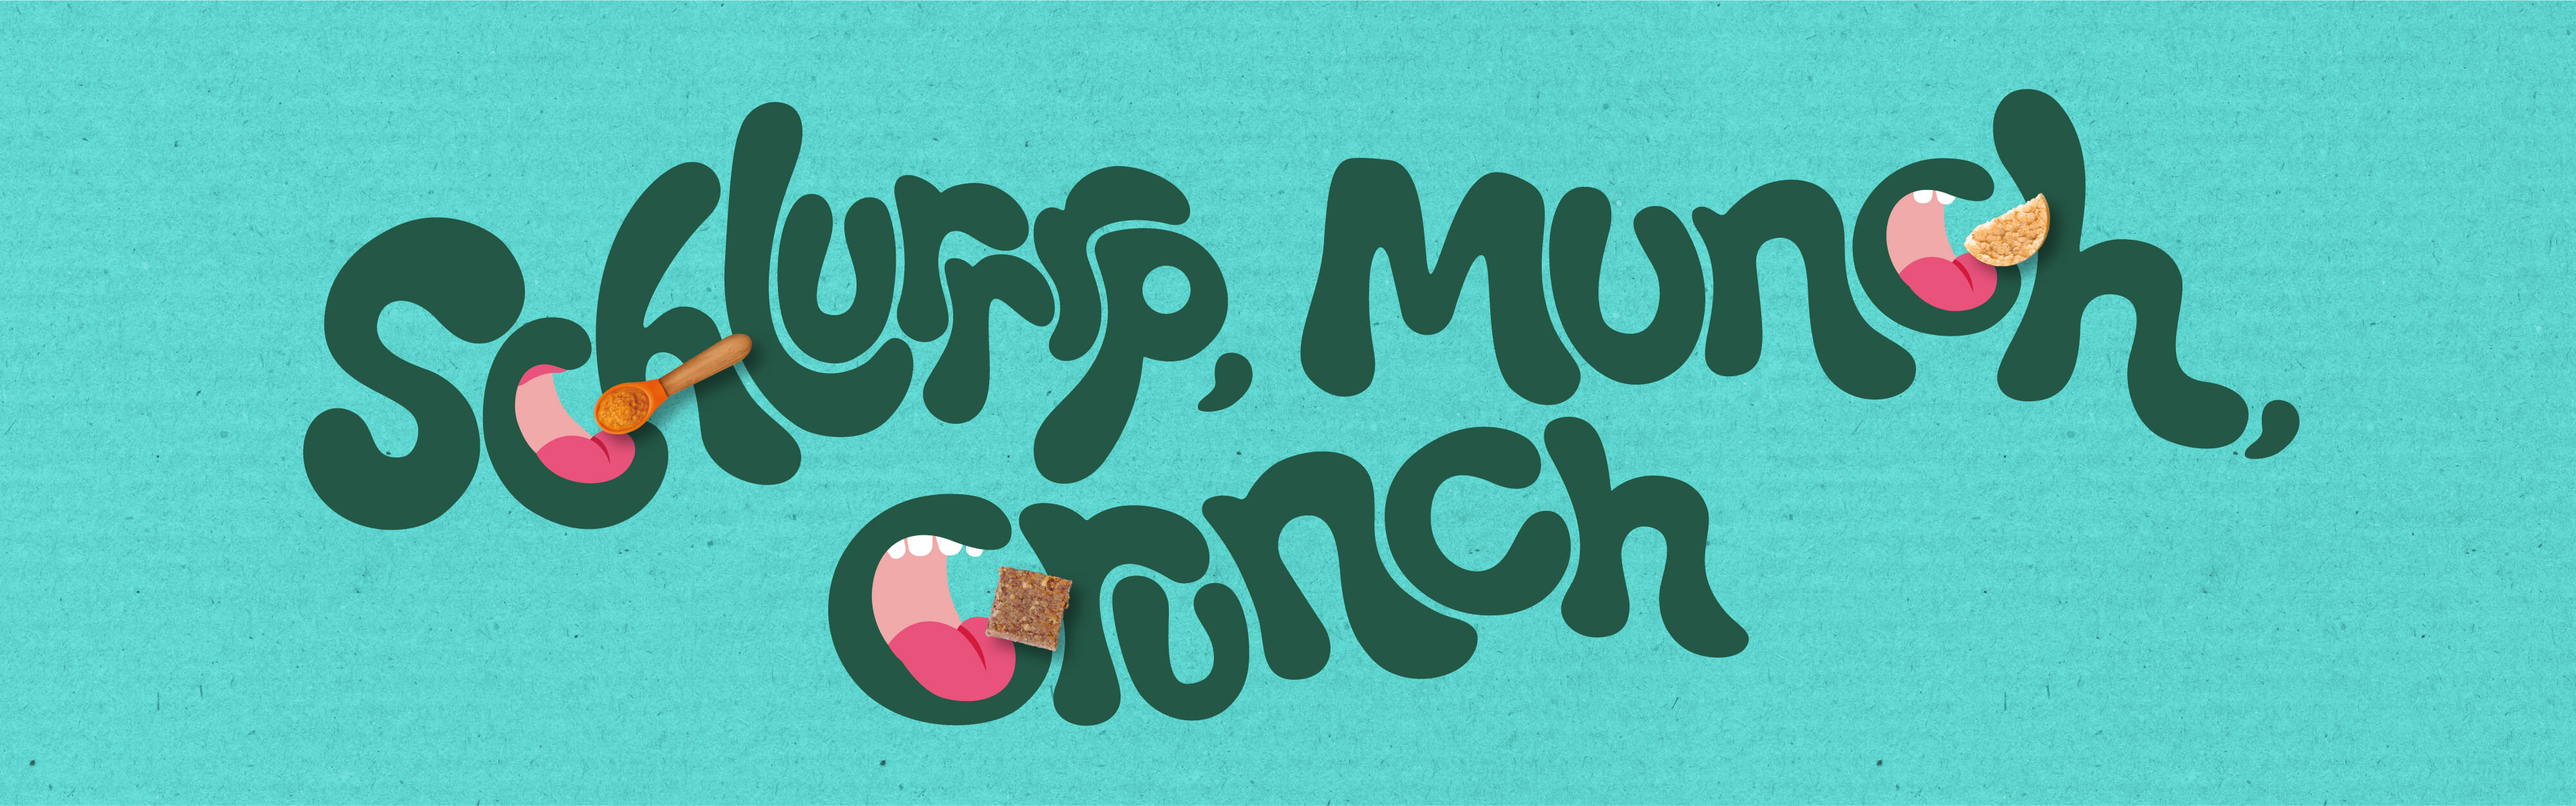 Organix green text that says "schlurrrp, munch, crunch" on a blue background